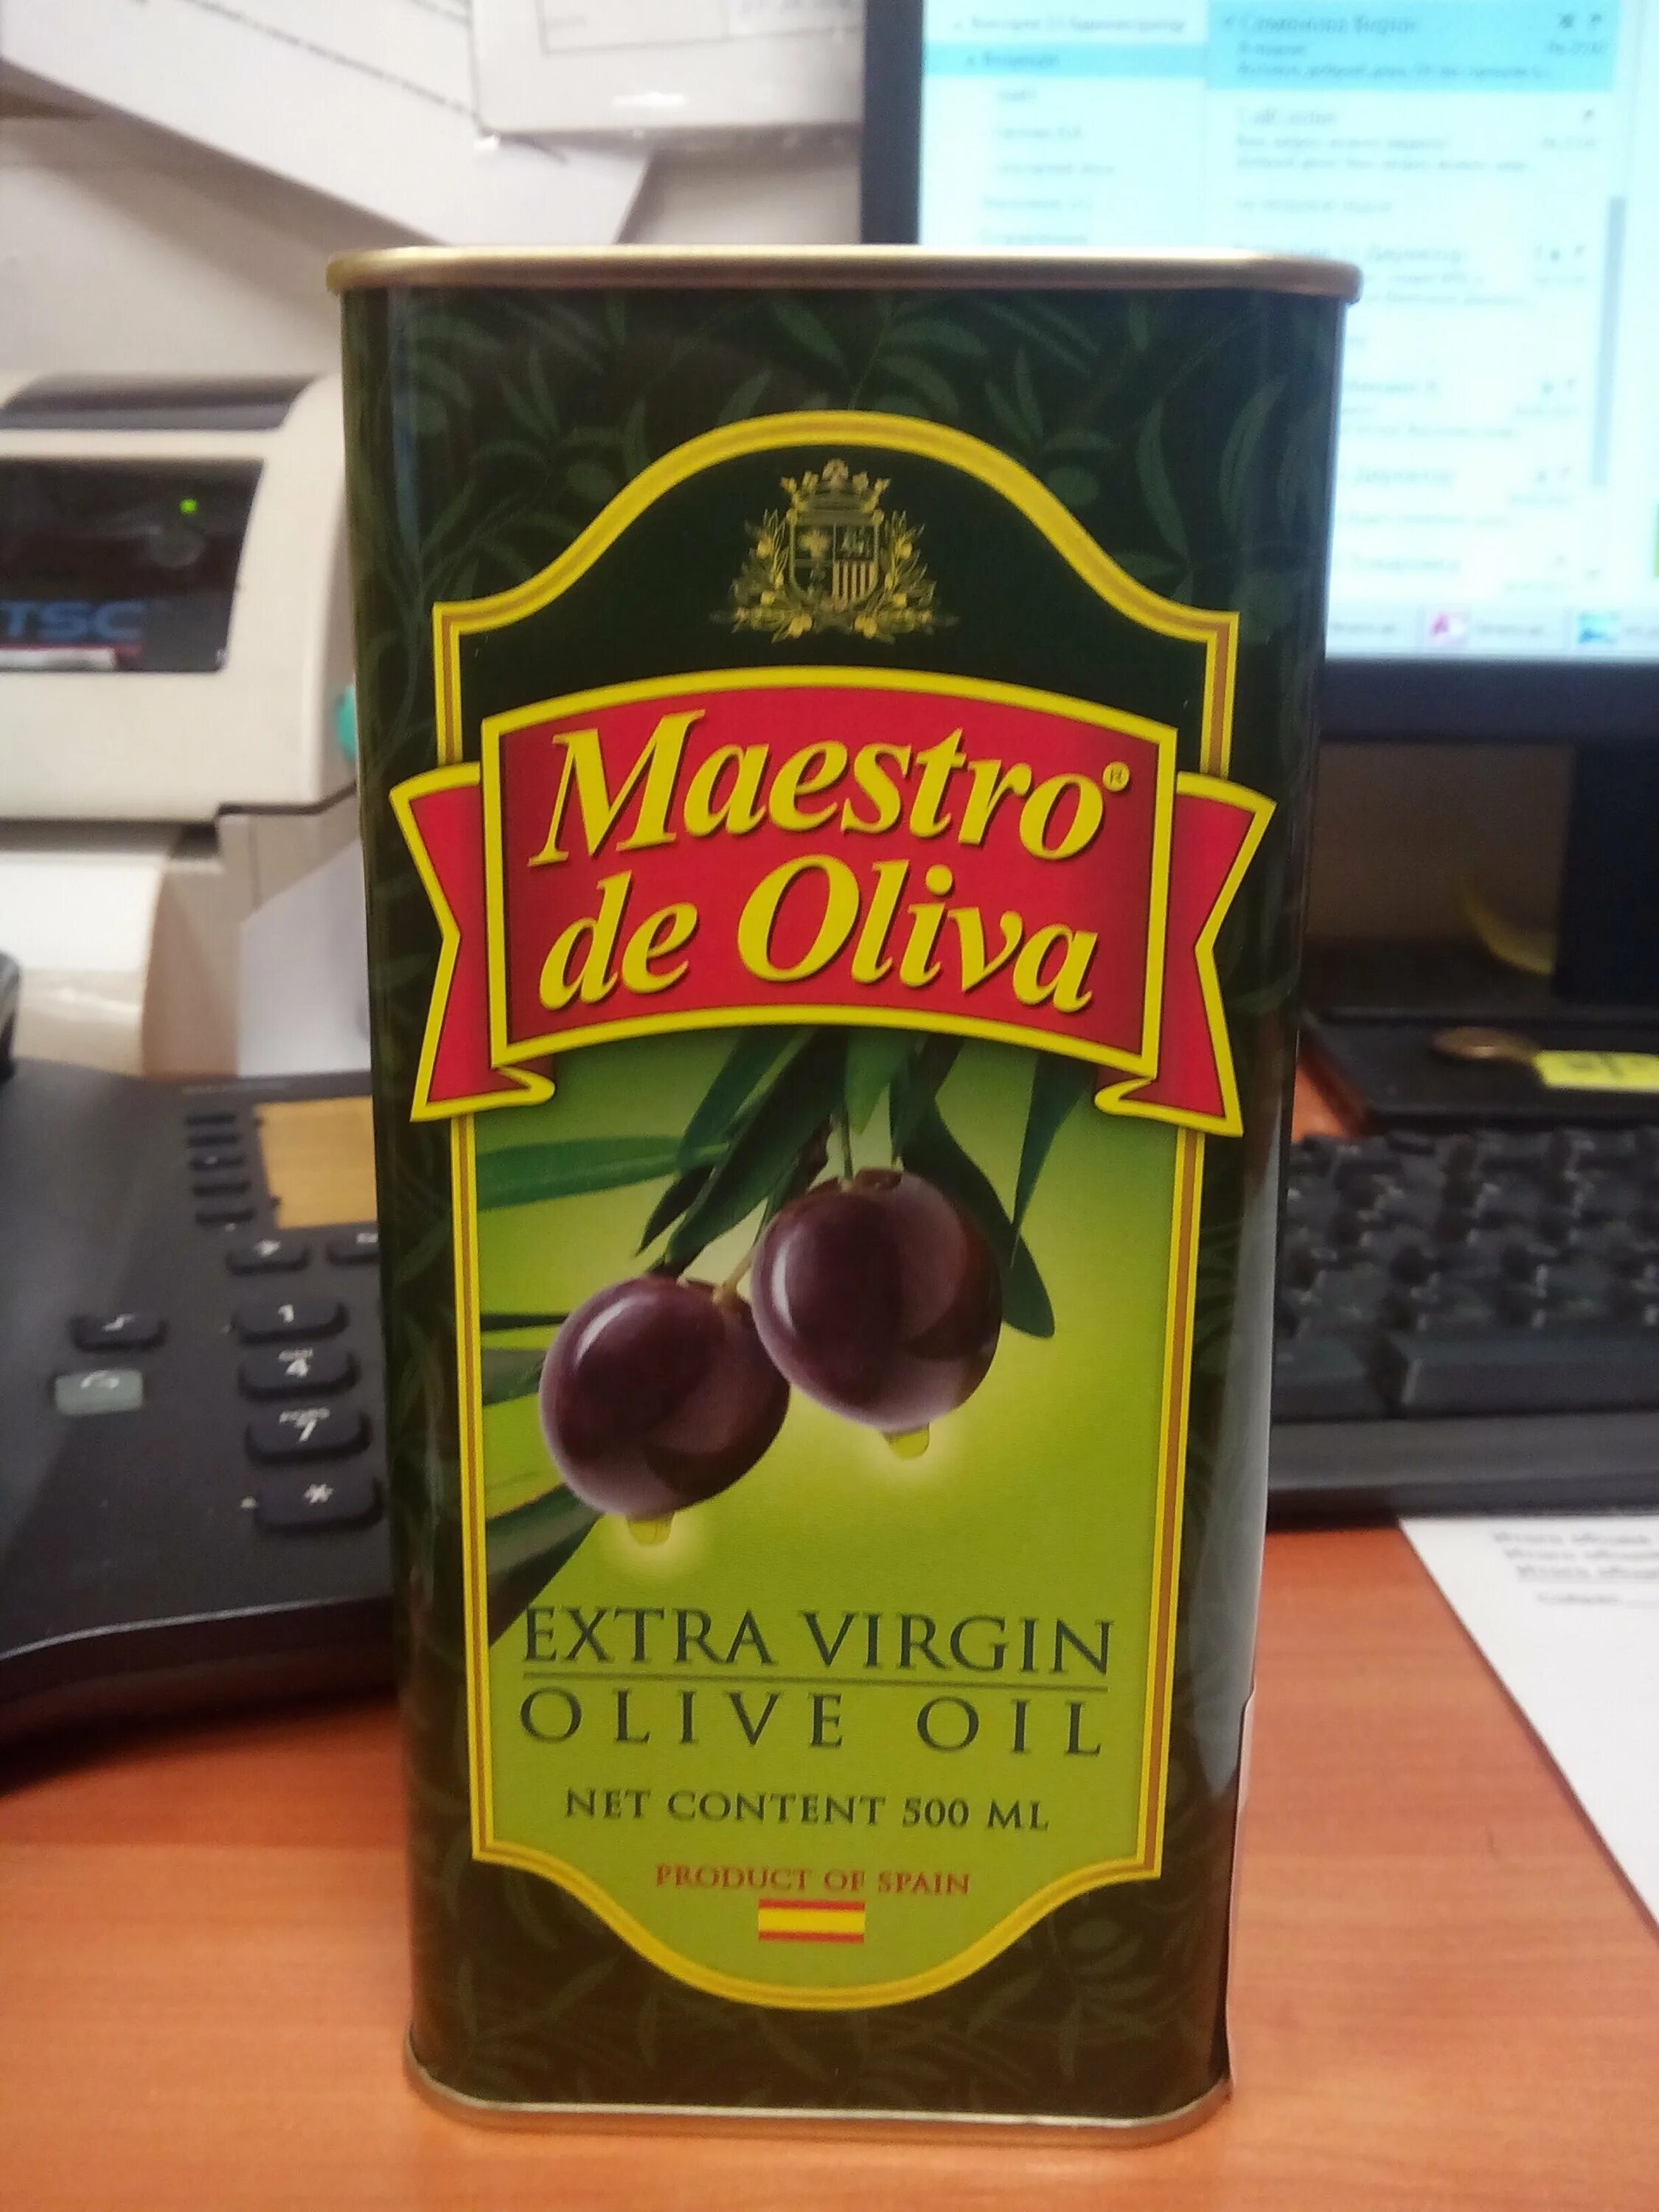 Maestro de oliva оливковое масло. Маэстро де олива оливковое масло. Maestro de Oliva масло оливковое Extra Virgin. Масло оливковое Maestro de Oliva 500мл. Масло маэстро де олива" Extra Virgin" 1л ж/б.